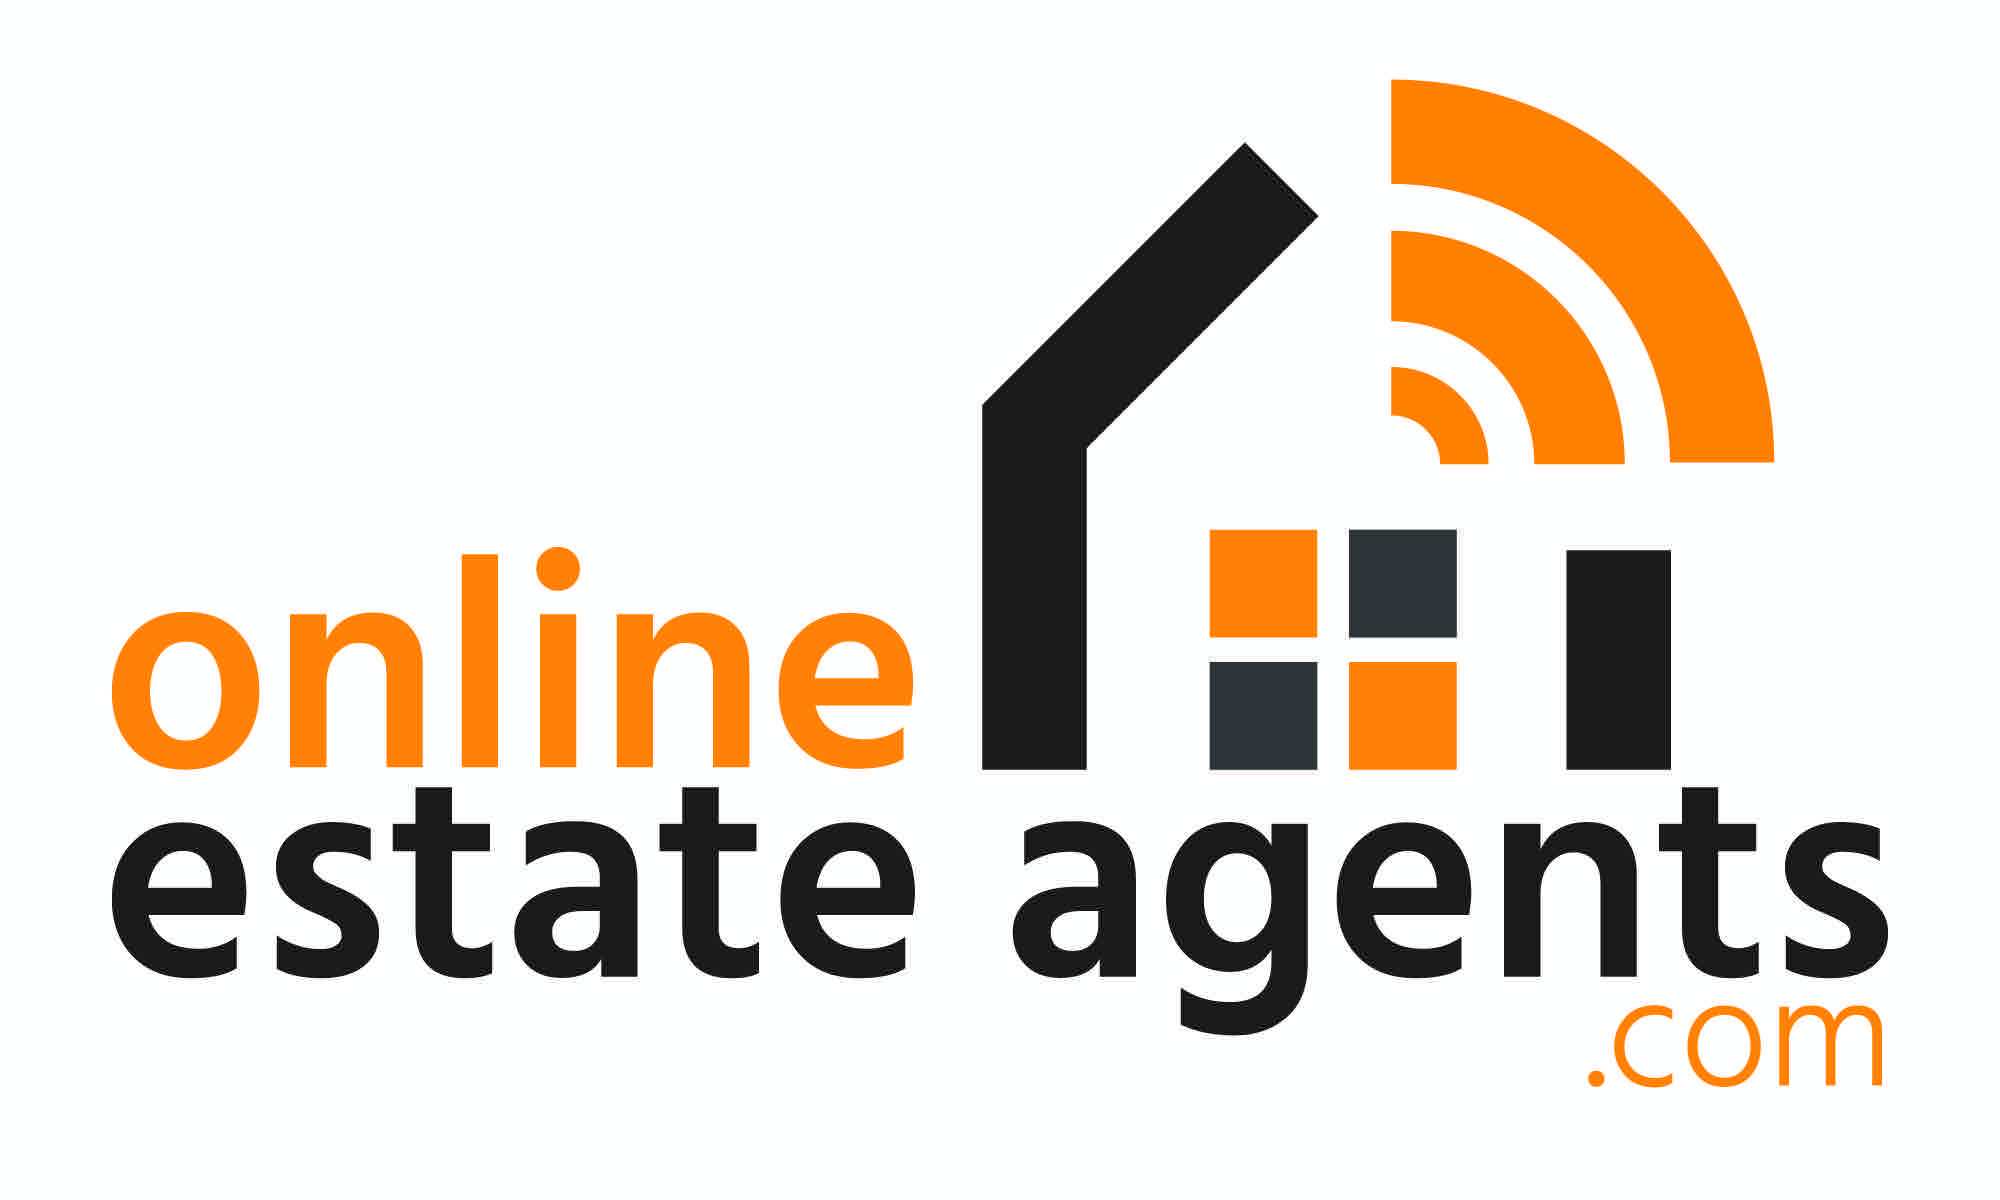 Online Estate agents